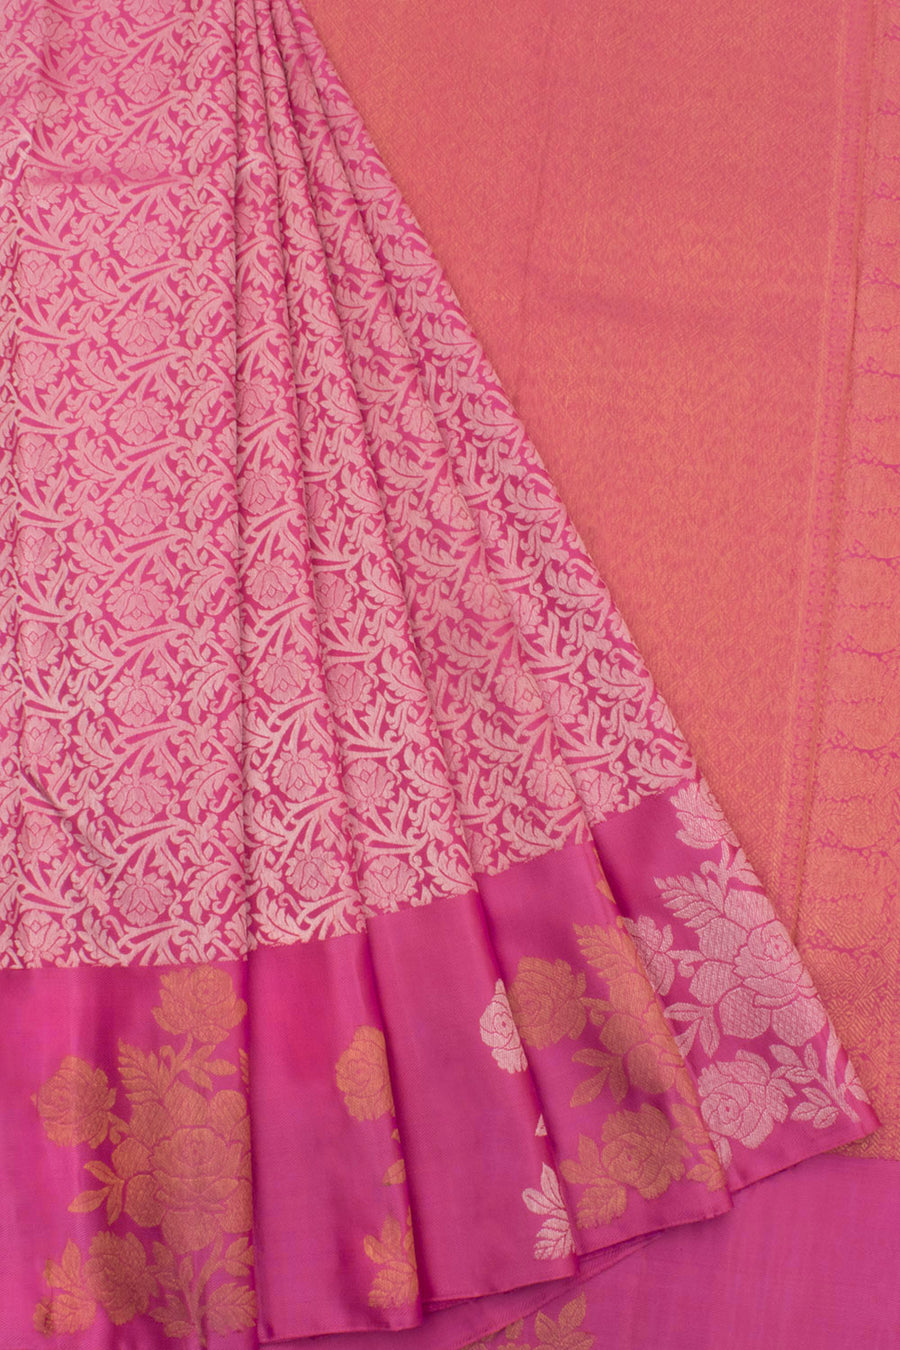 Handloom Pure Zari Jacquard Kanjivaram Silk Saree with Silver Zari Kodimalar Design and Butta Border